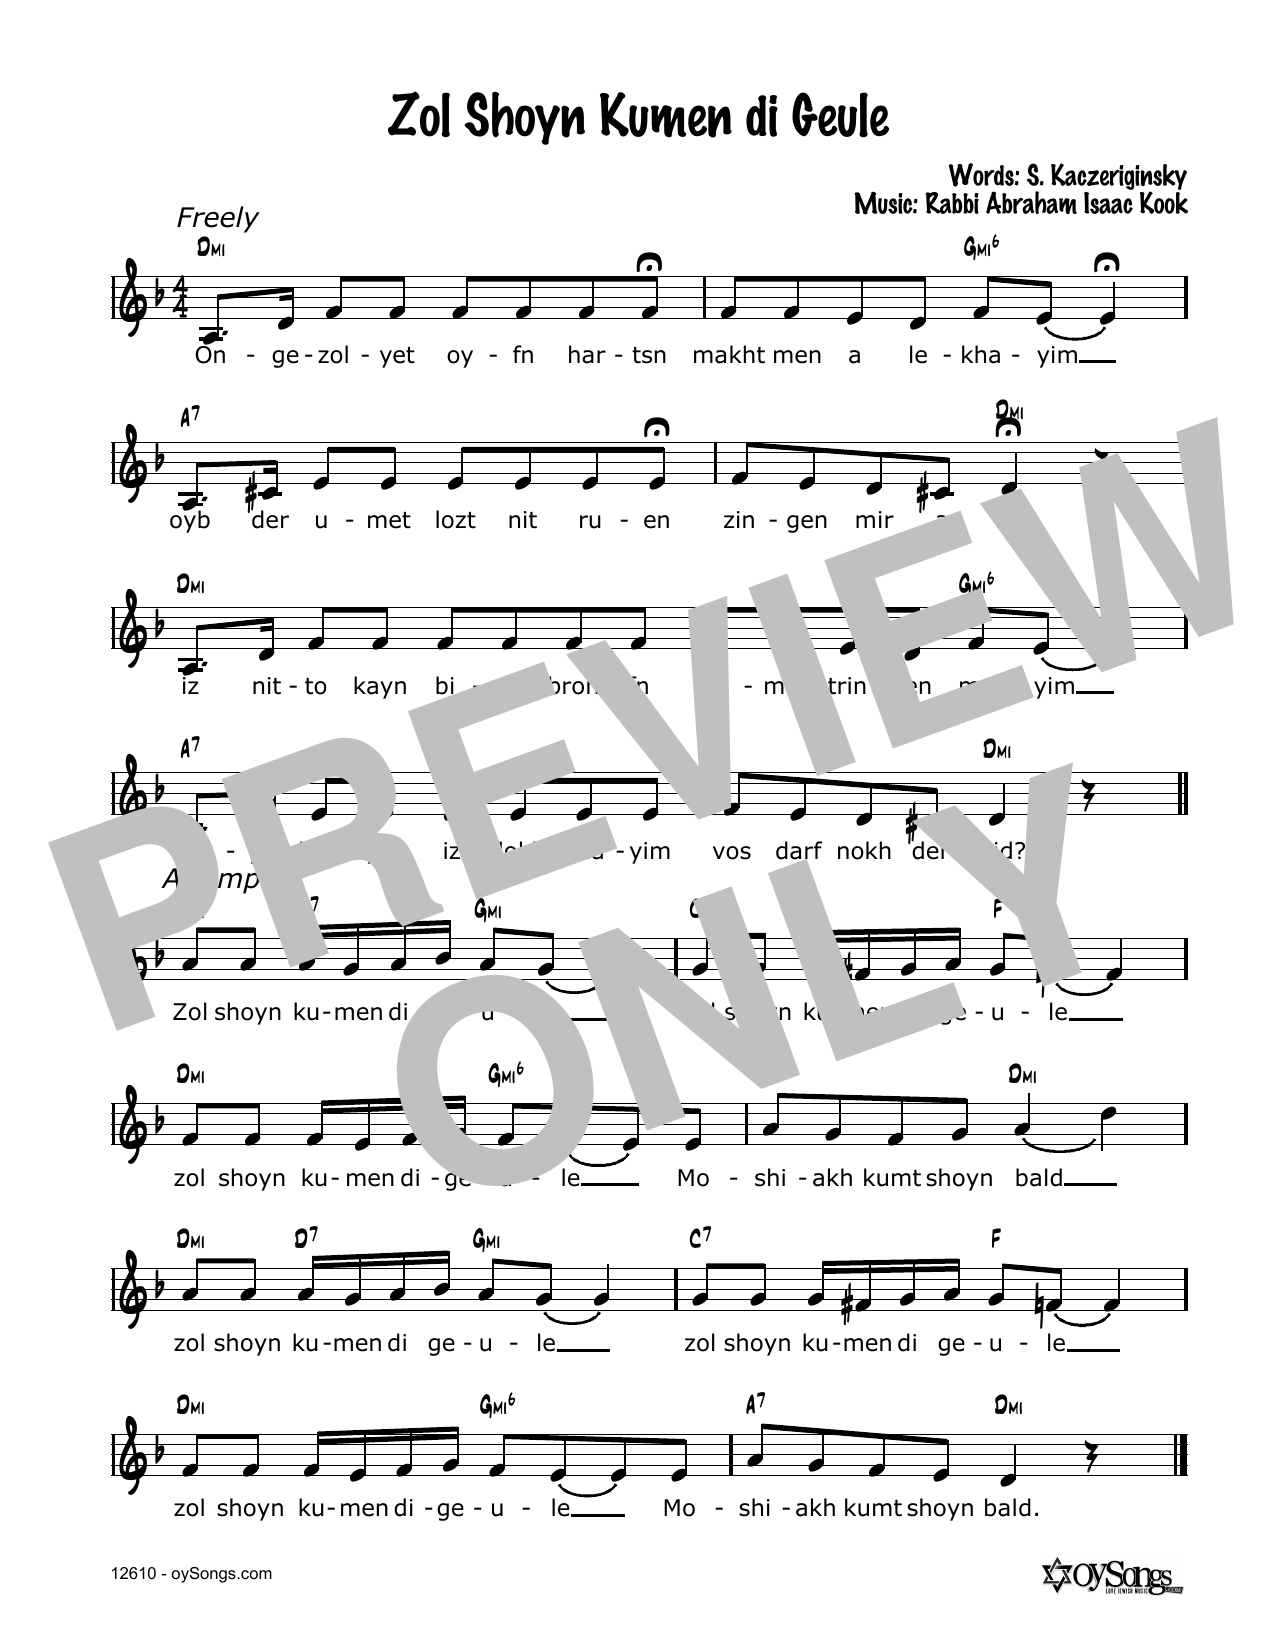 Cindy Paley Zol Shoyn Kumen Di G'ulo Sheet Music Notes & Chords for Melody Line, Lyrics & Chords - Download or Print PDF